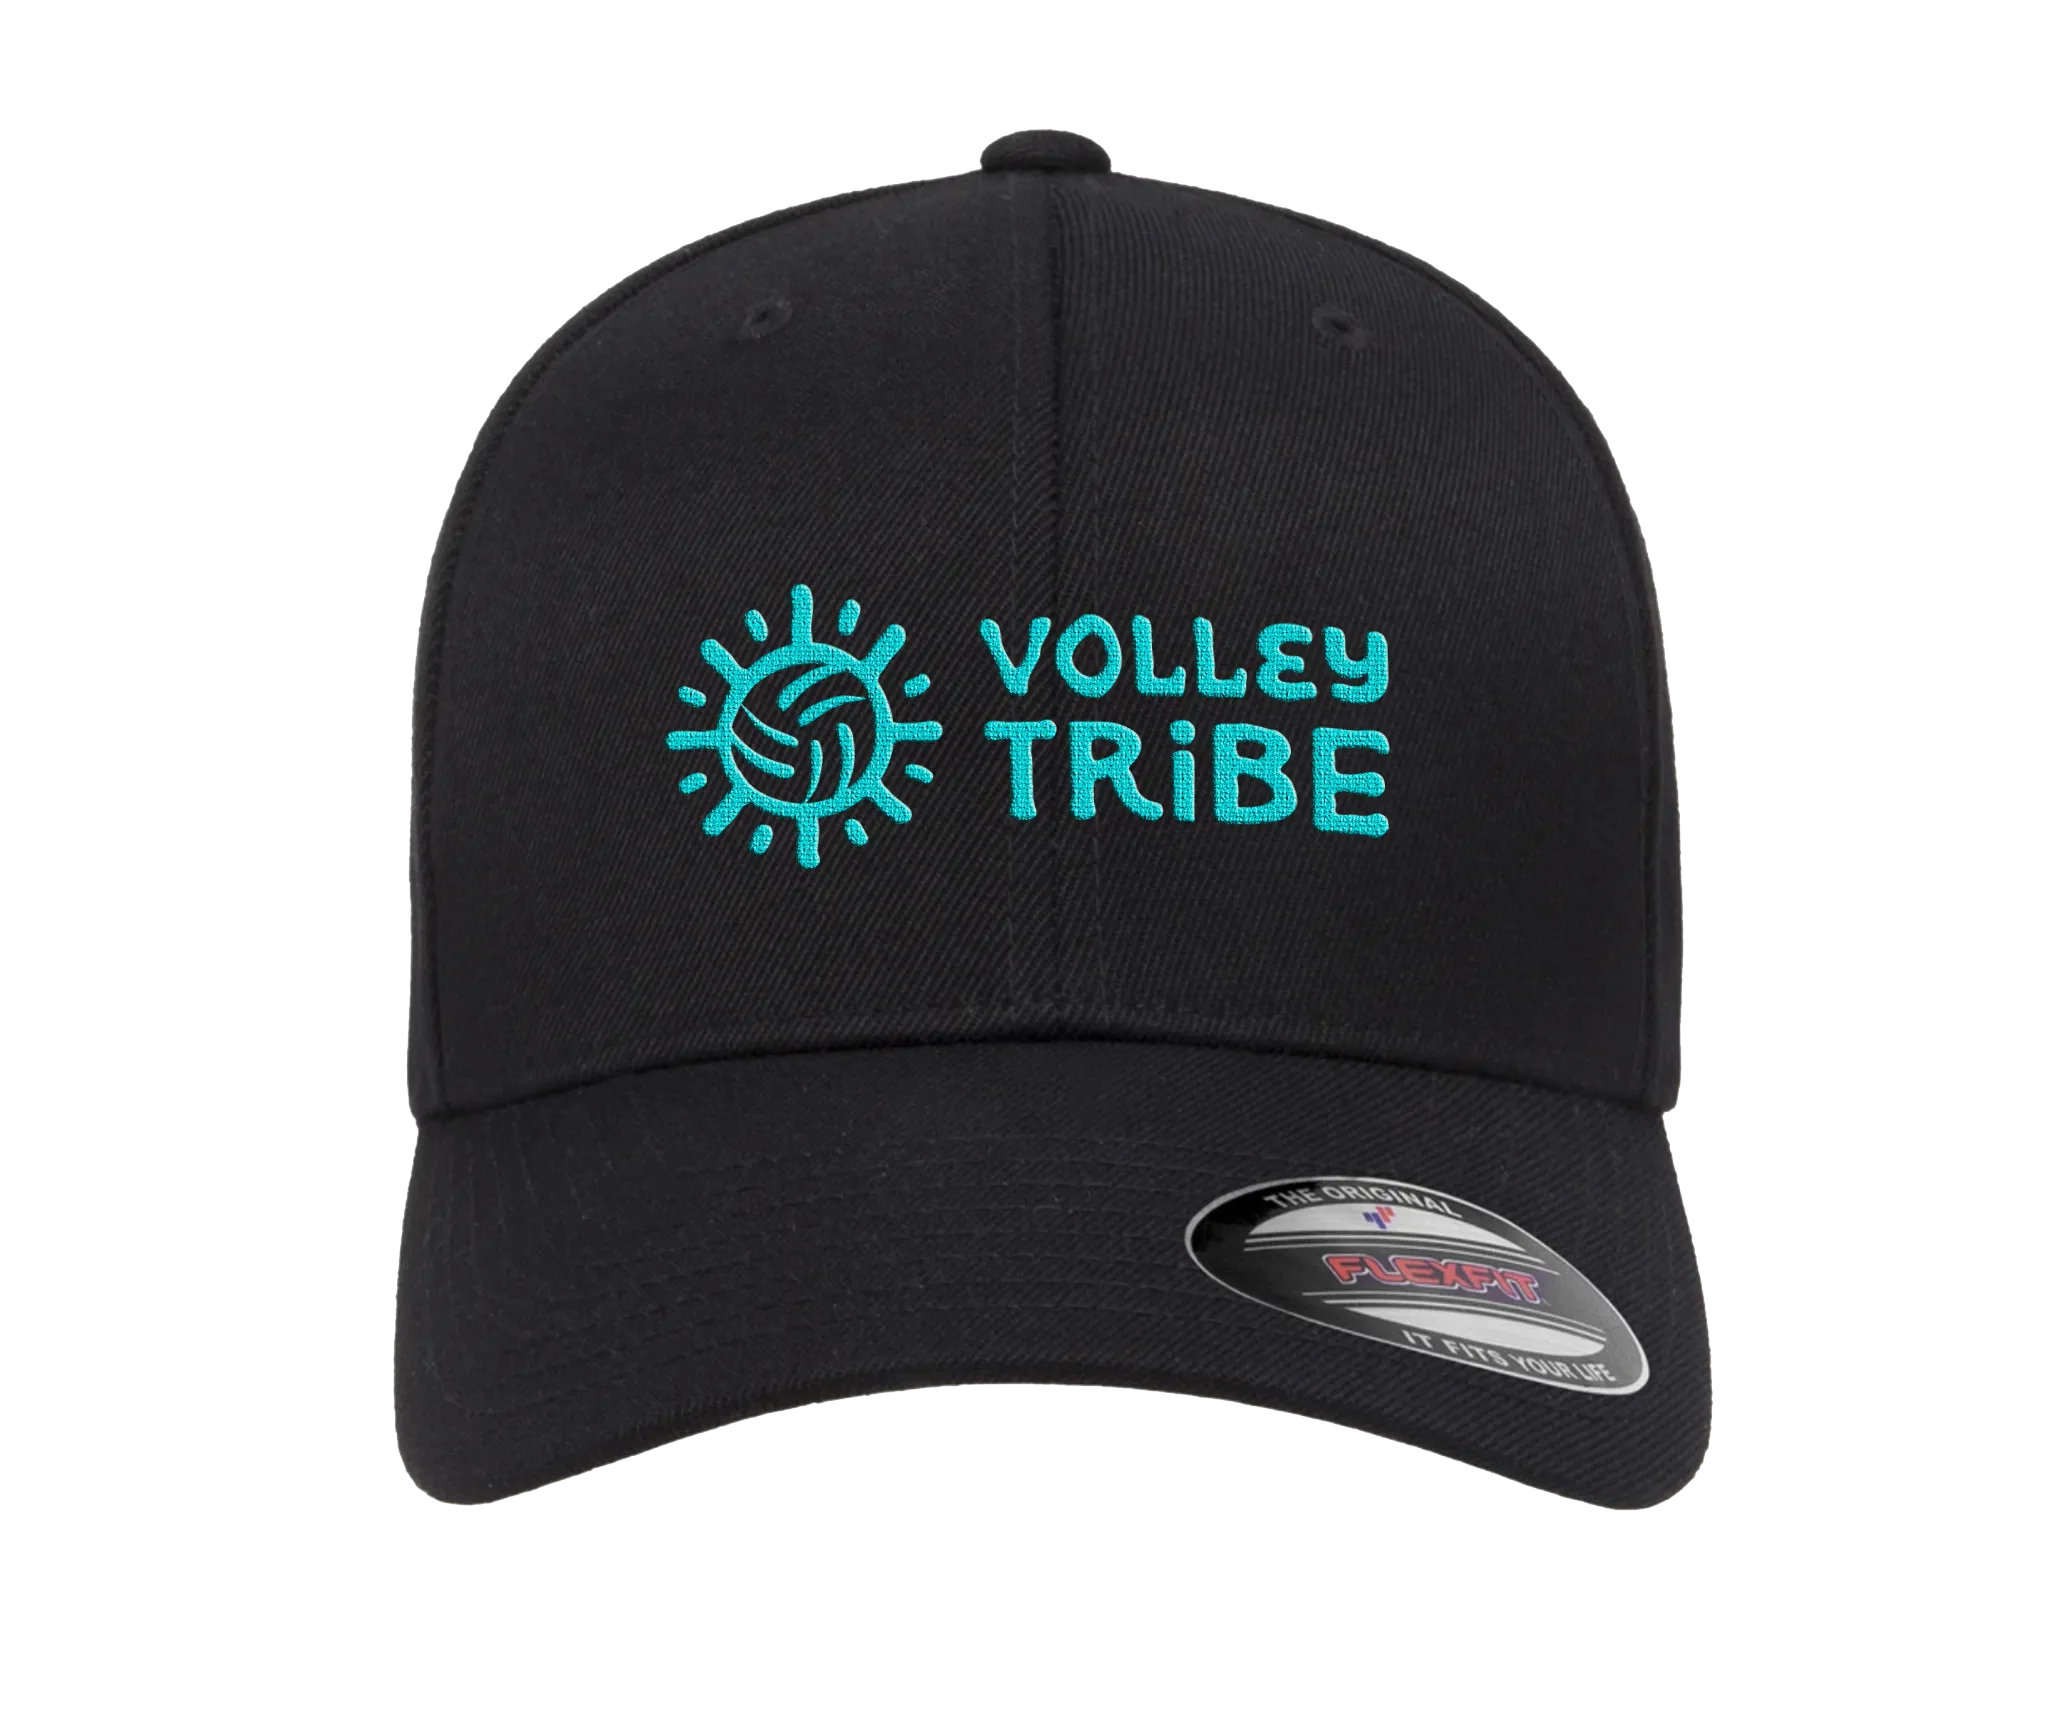 volleytribe hat